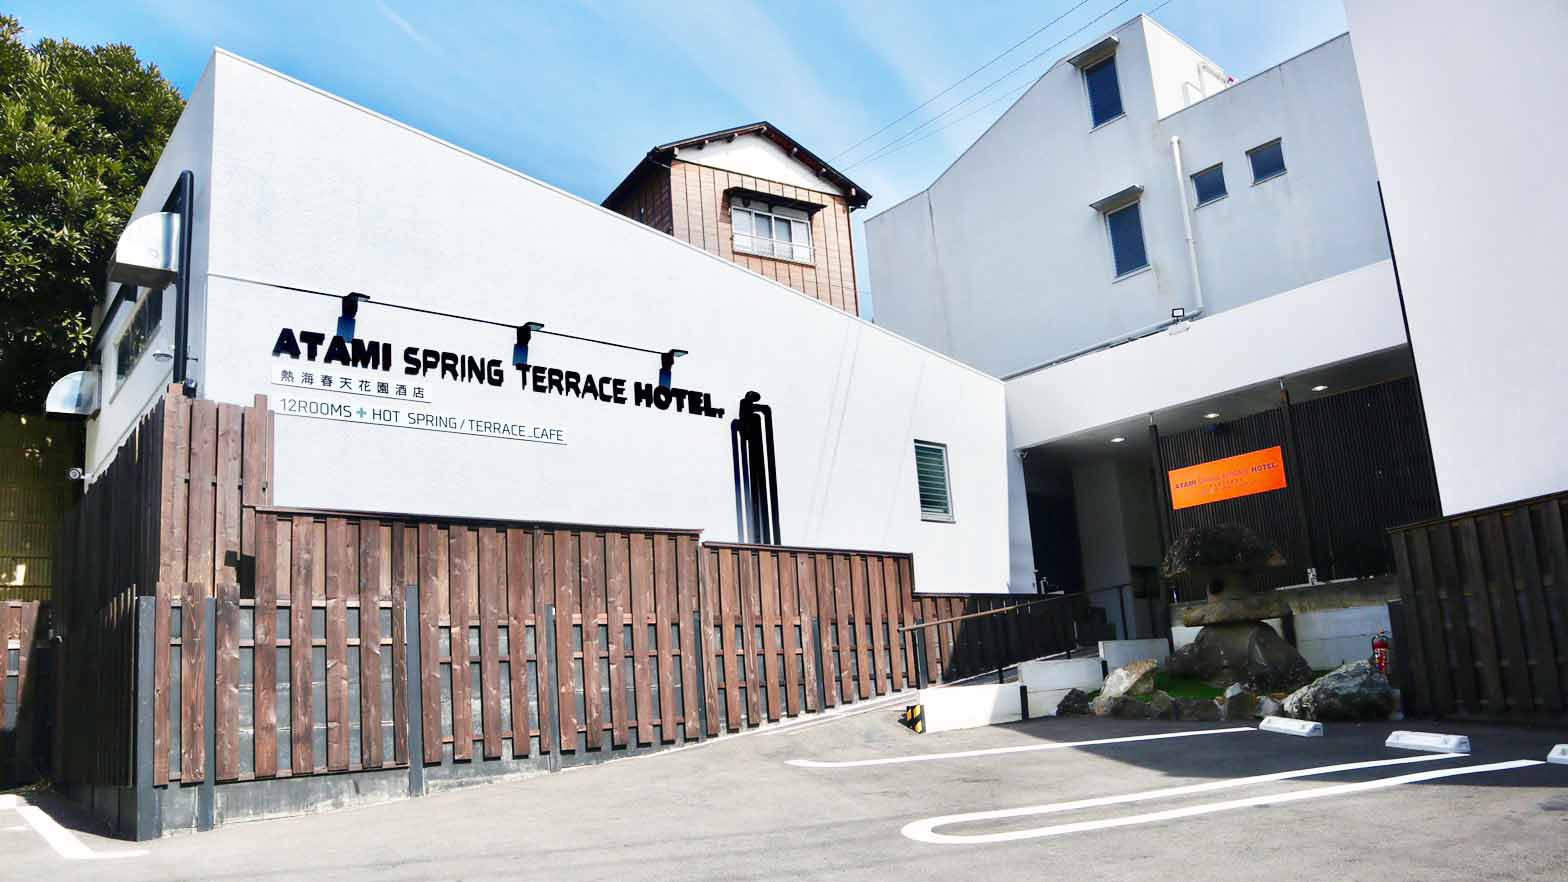 Atami Spring Terrace Hotel